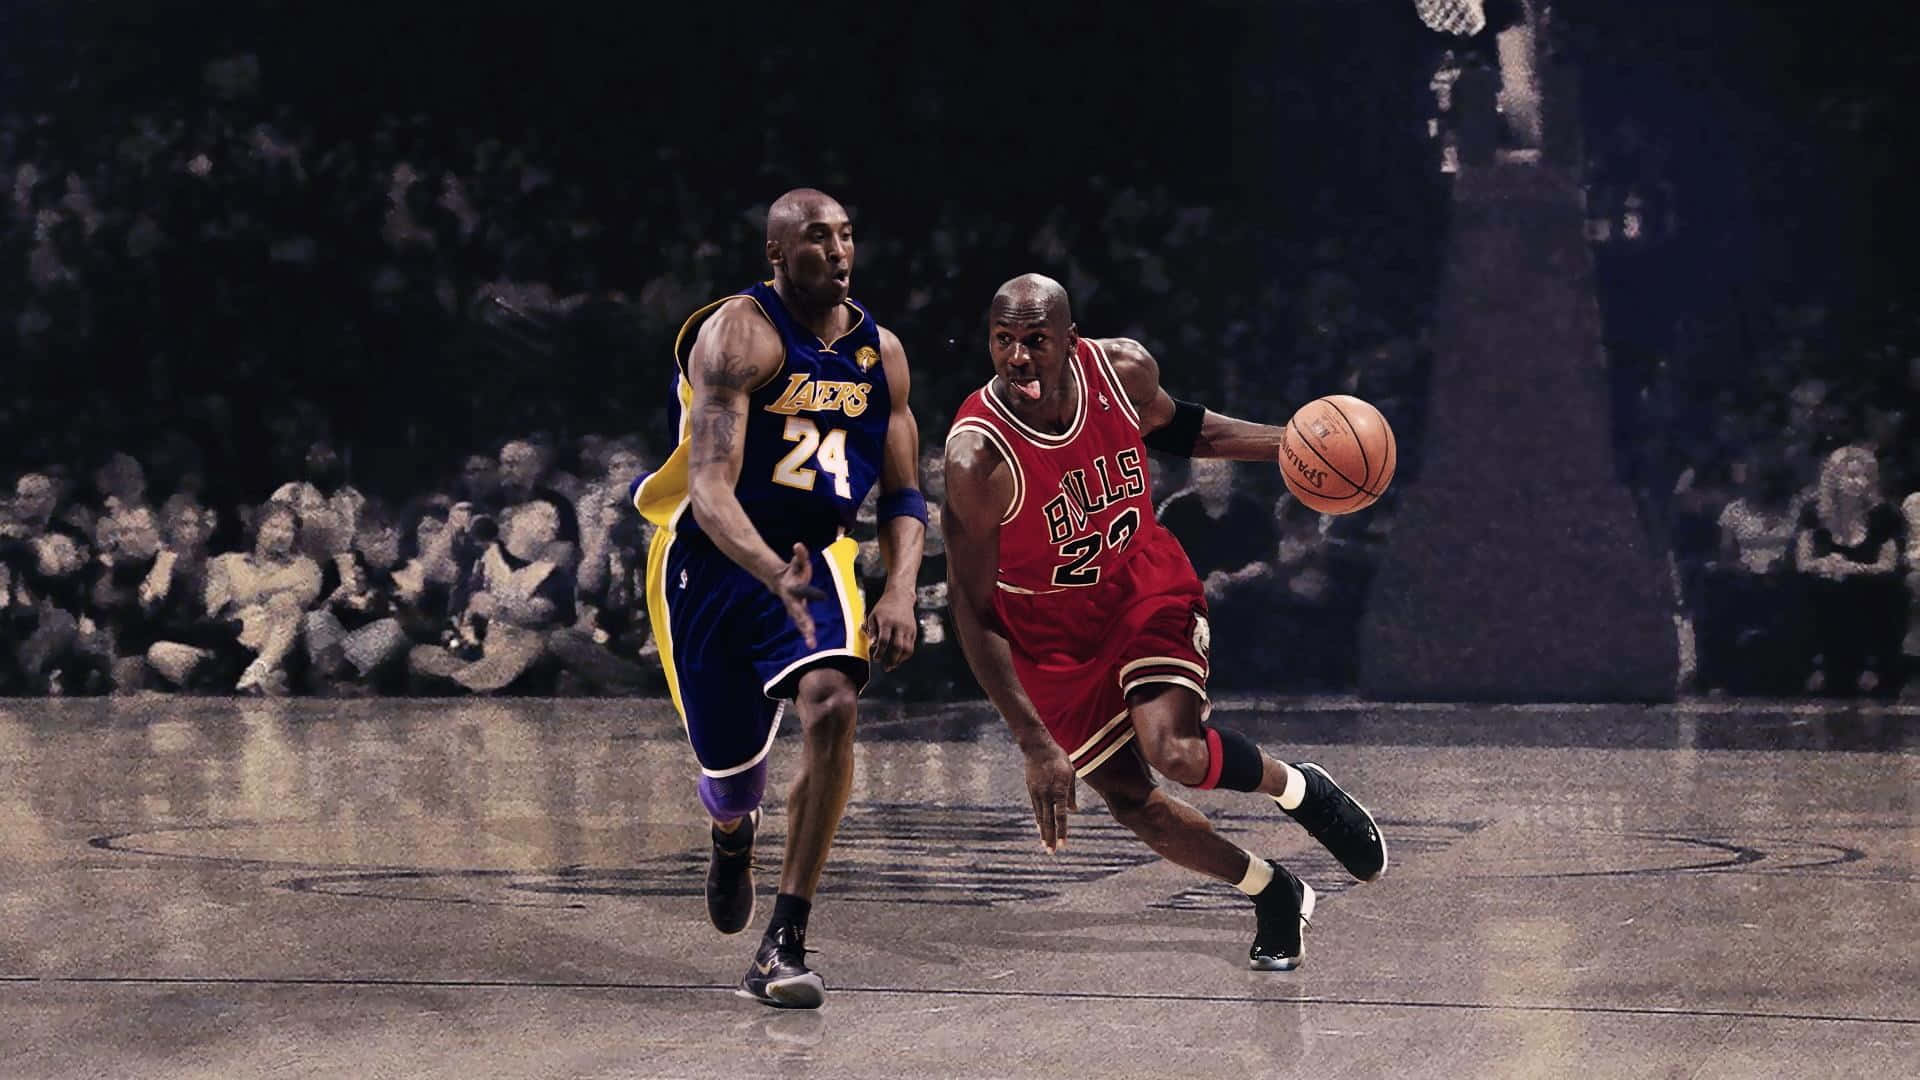 The Inspirational Michael Jordan